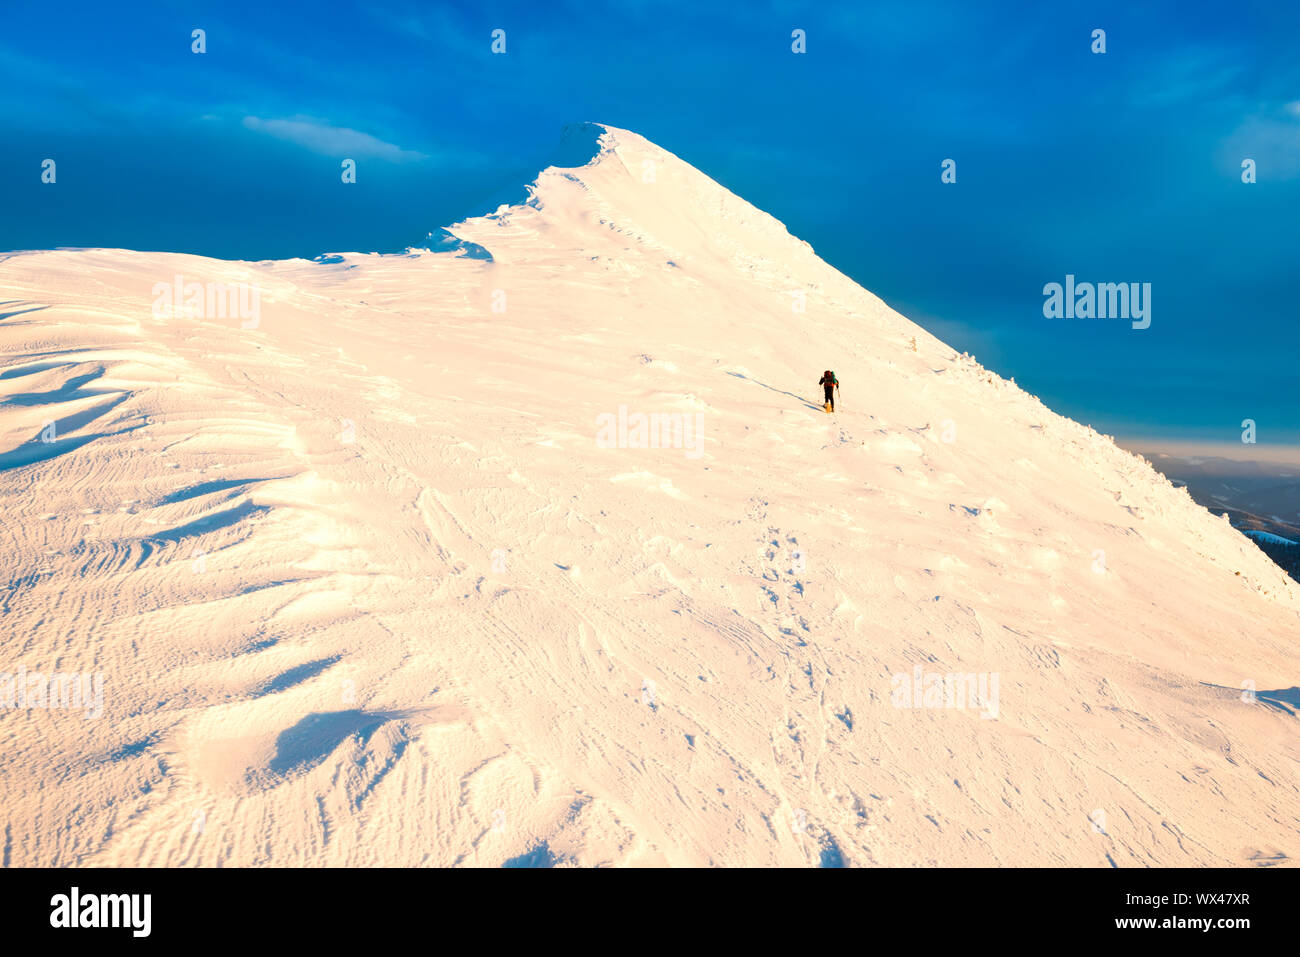 Bergsteiger mit Hund Klettern am Berg Stockfoto